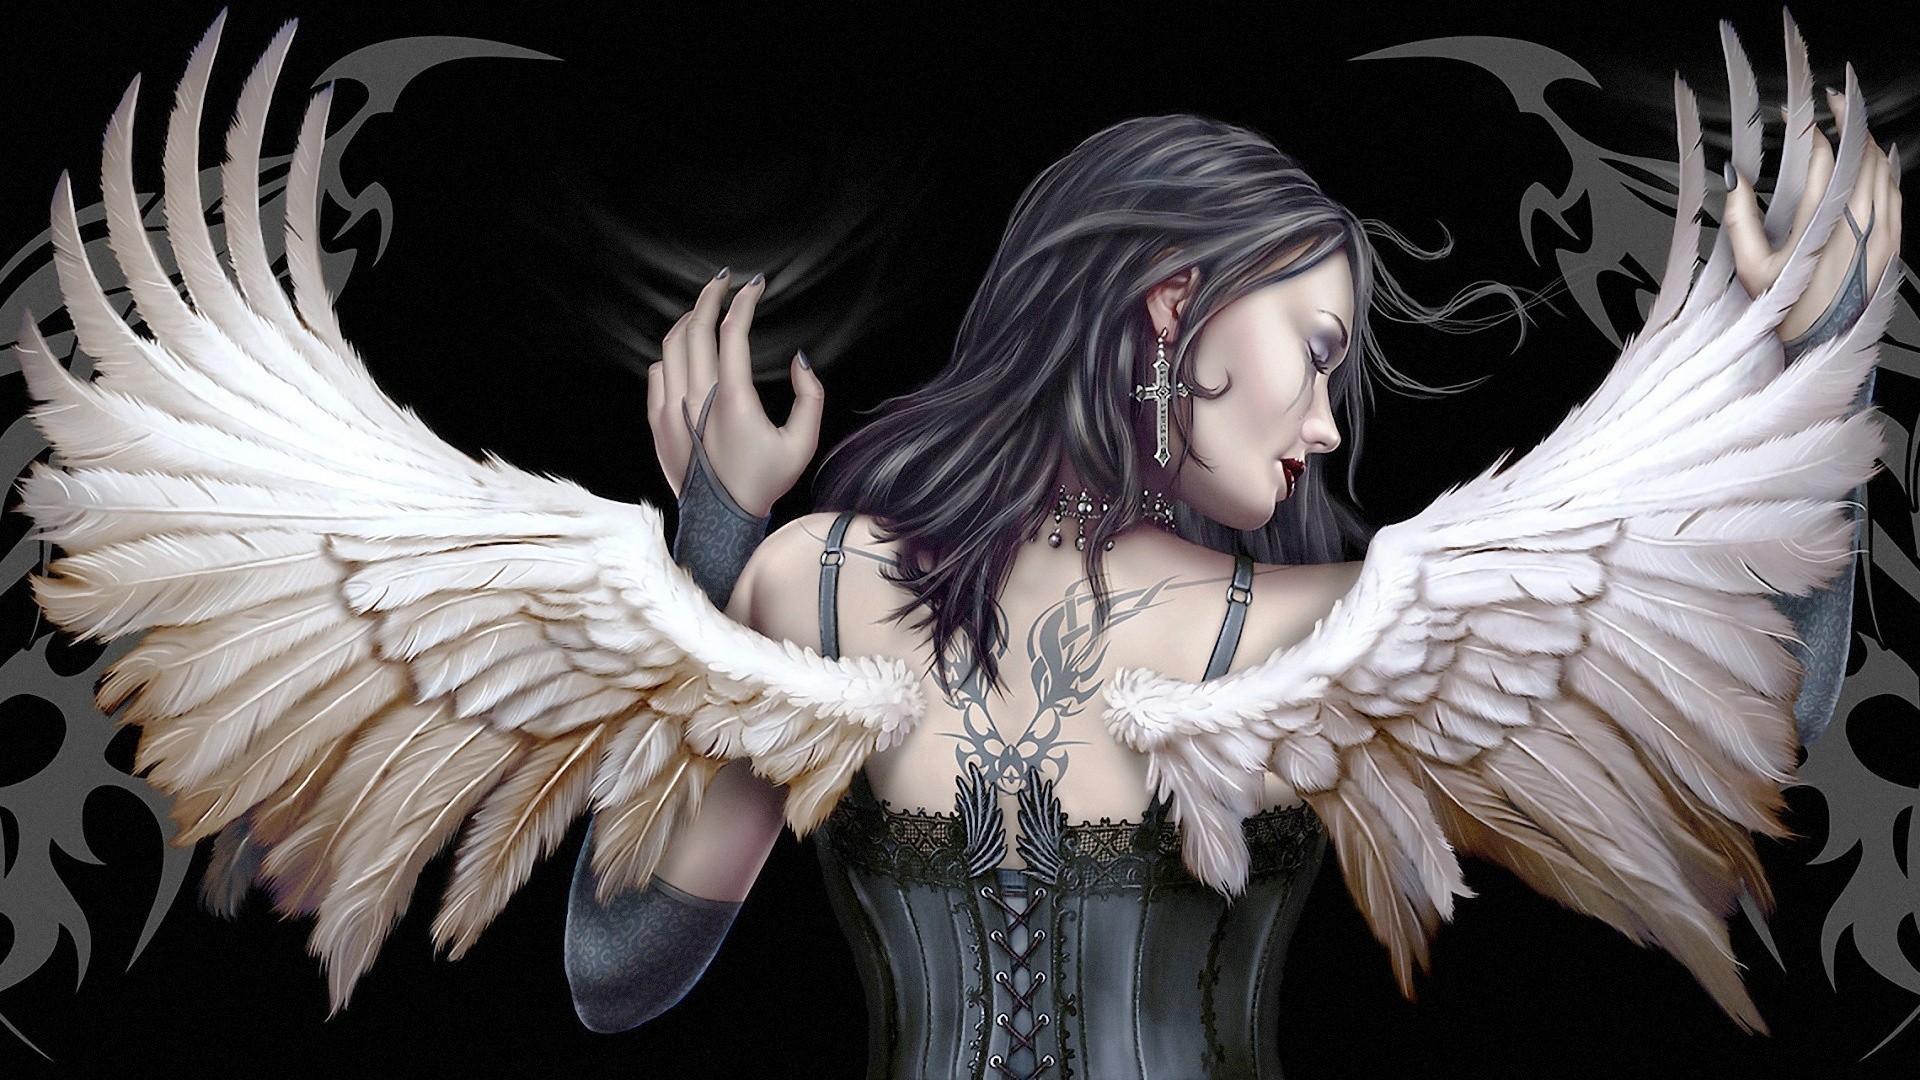 General 1920x1080 wings fantasy girl fantasy art artwork dark hair women back black background red lipstick inked girls angel